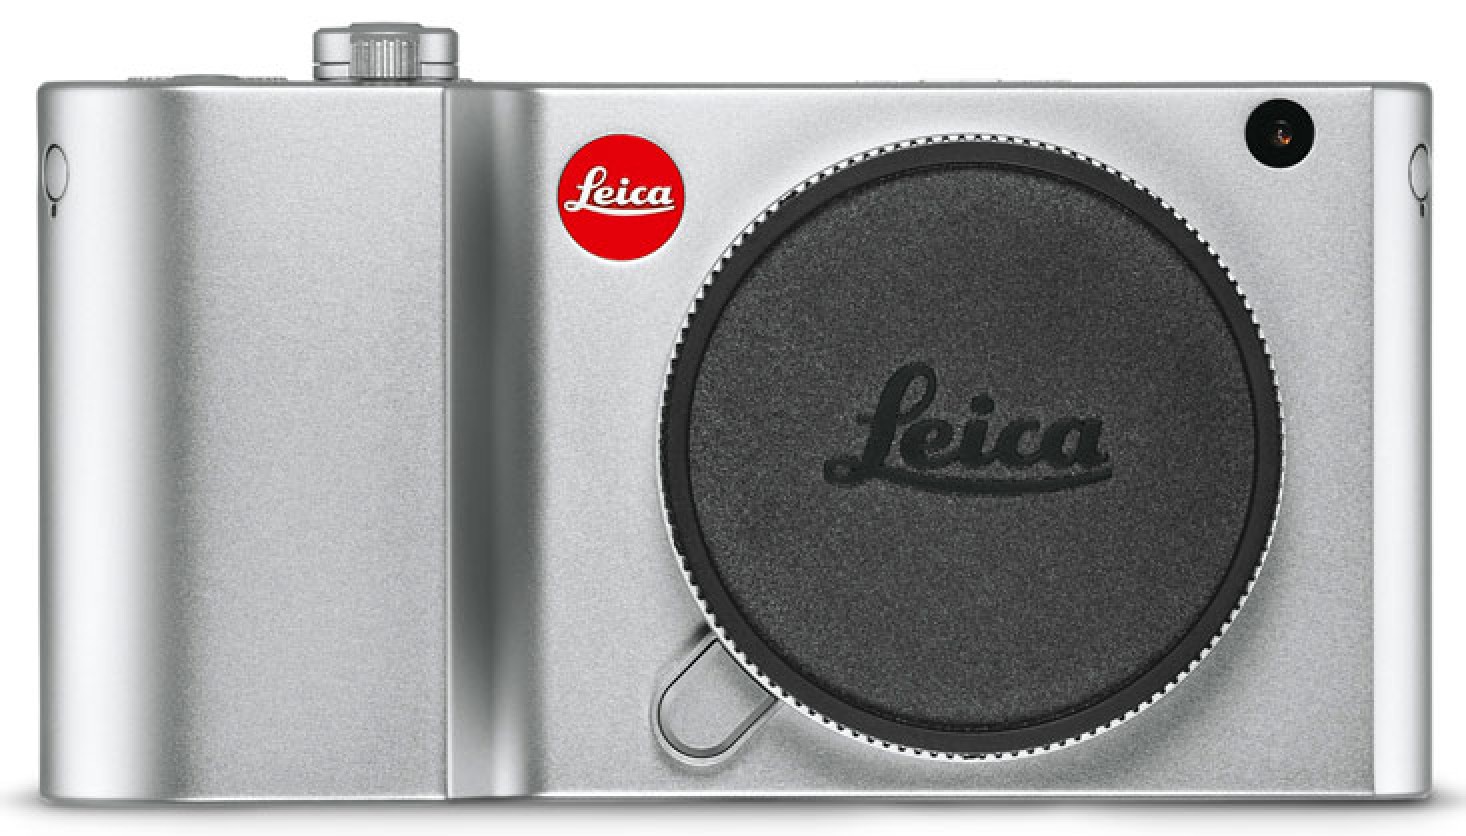 Leica TL2 Mirrorless Digital Camera Body -Silver Anodized Finish